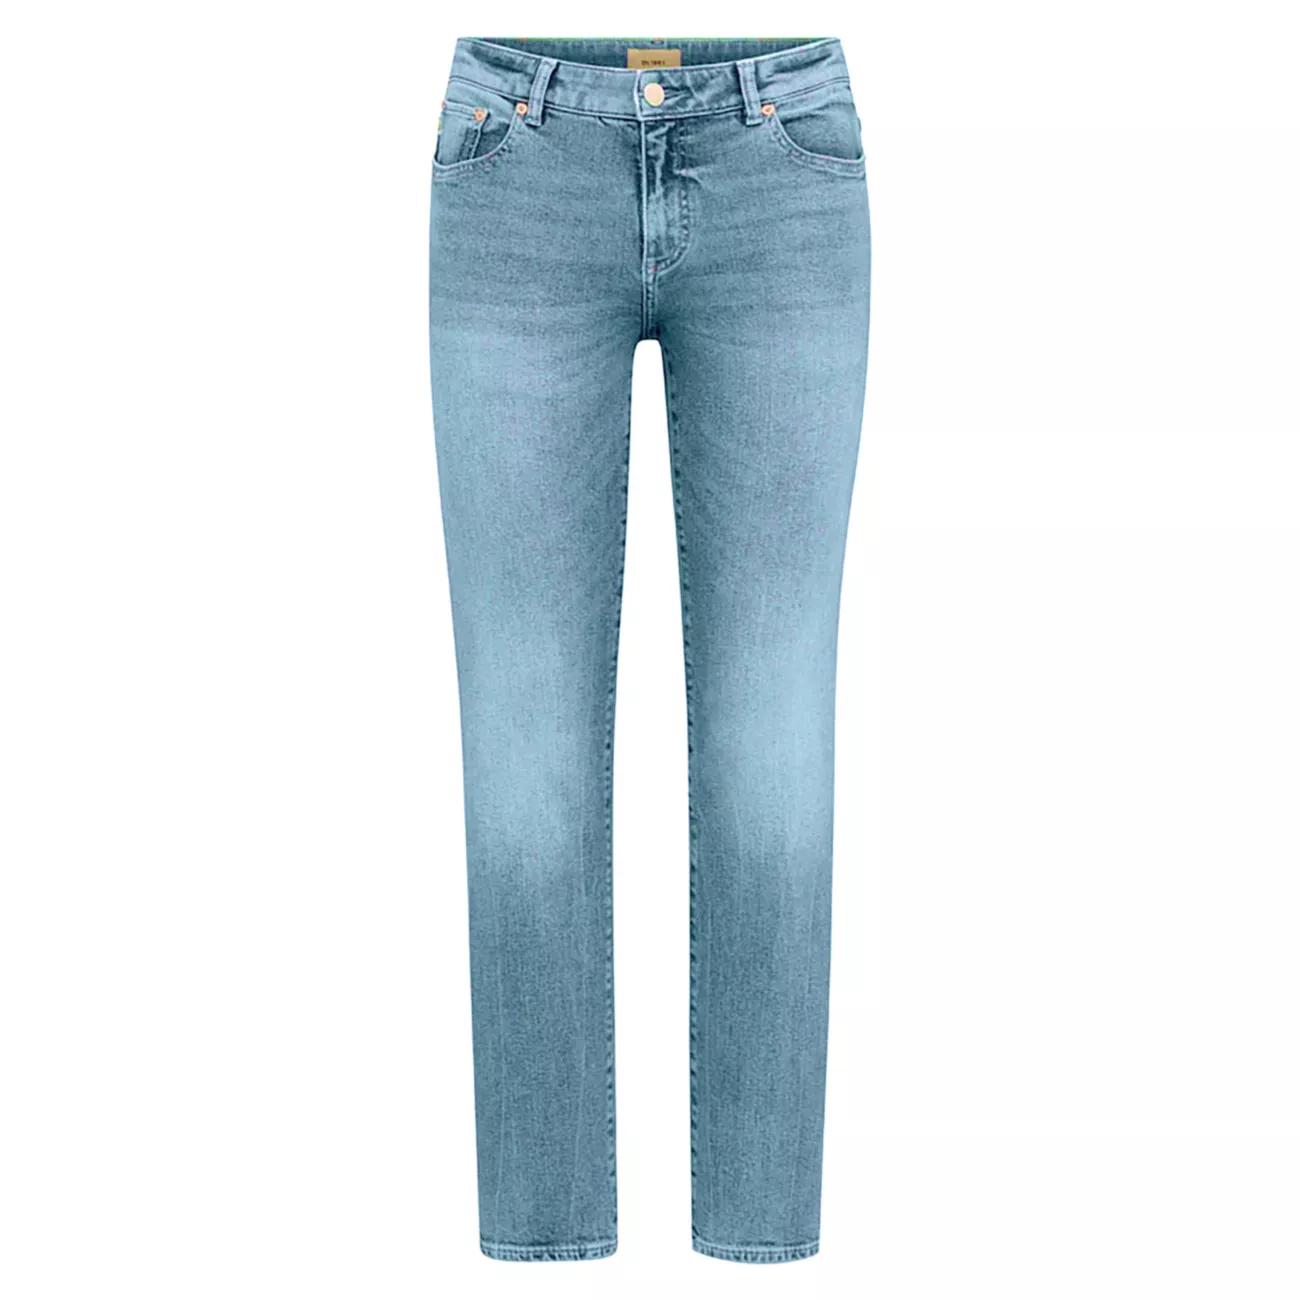 Nick Slim Fit Jeans DL1961